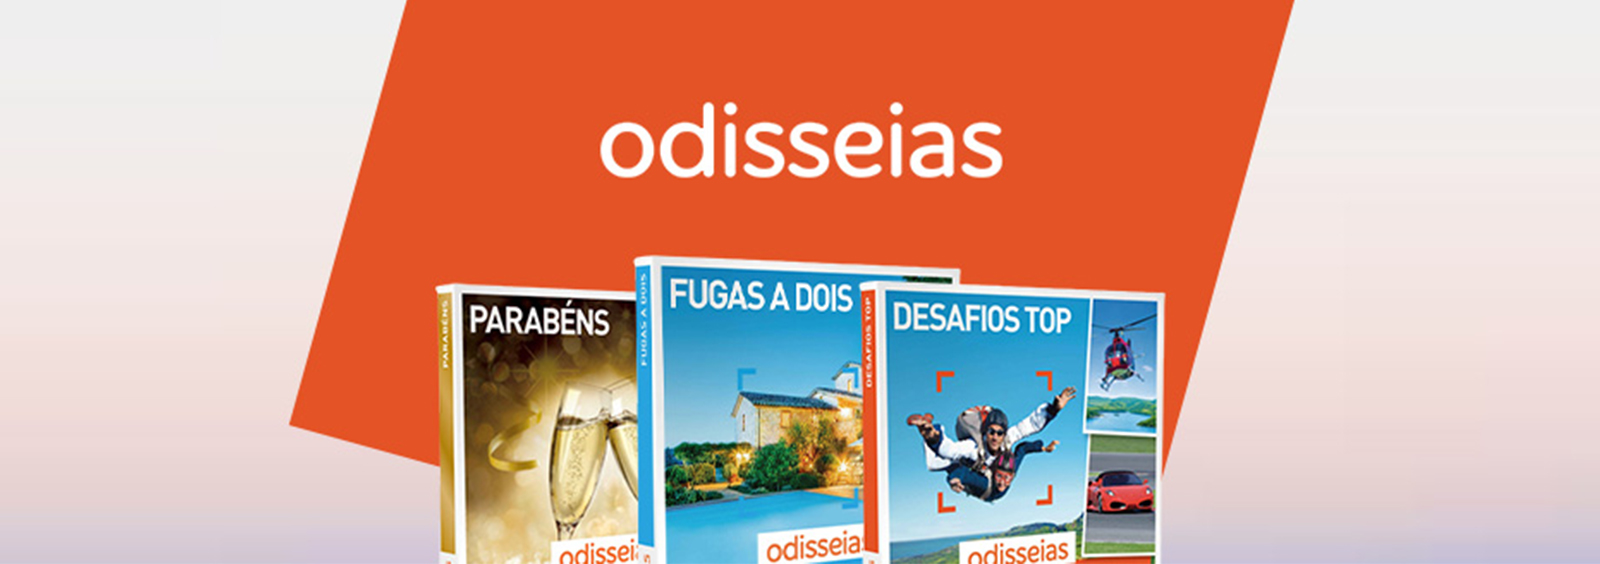 Odisseias - Odisseias